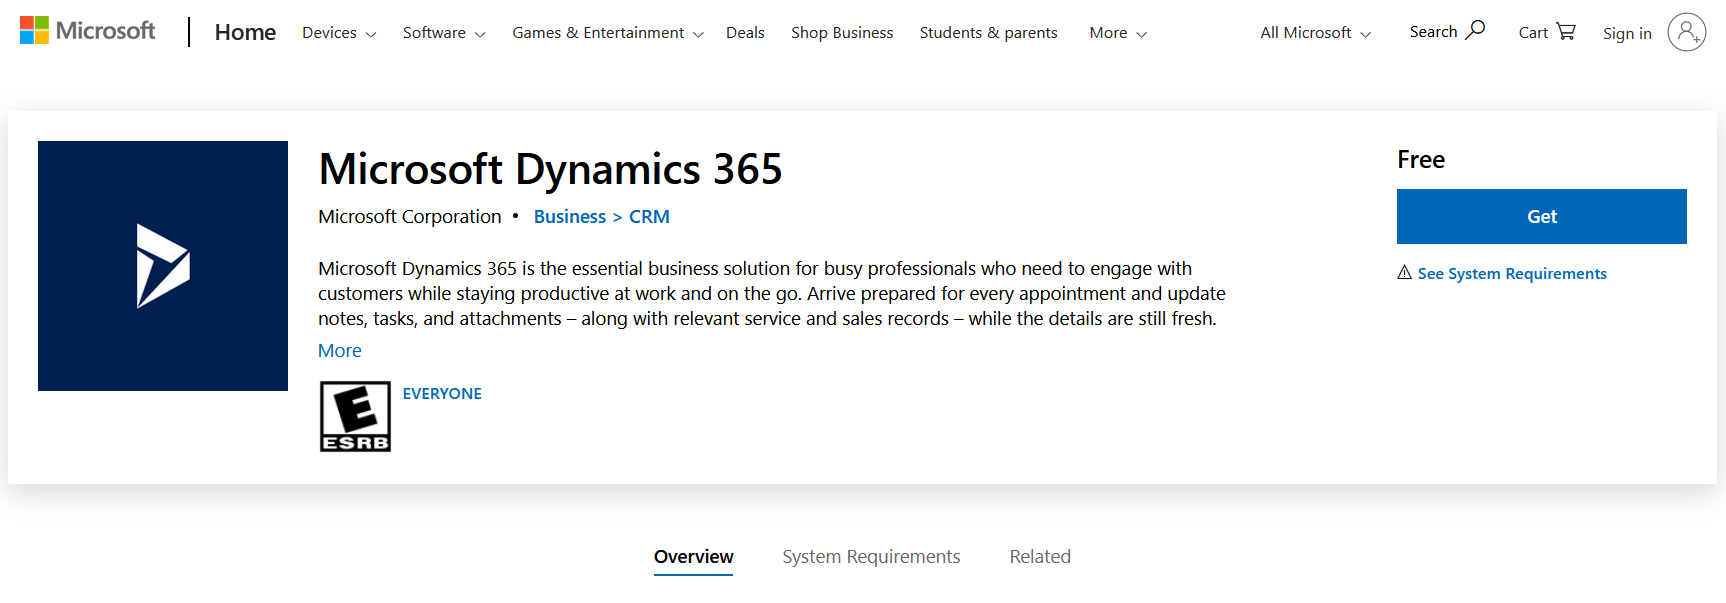 Dynamics 365 windows app